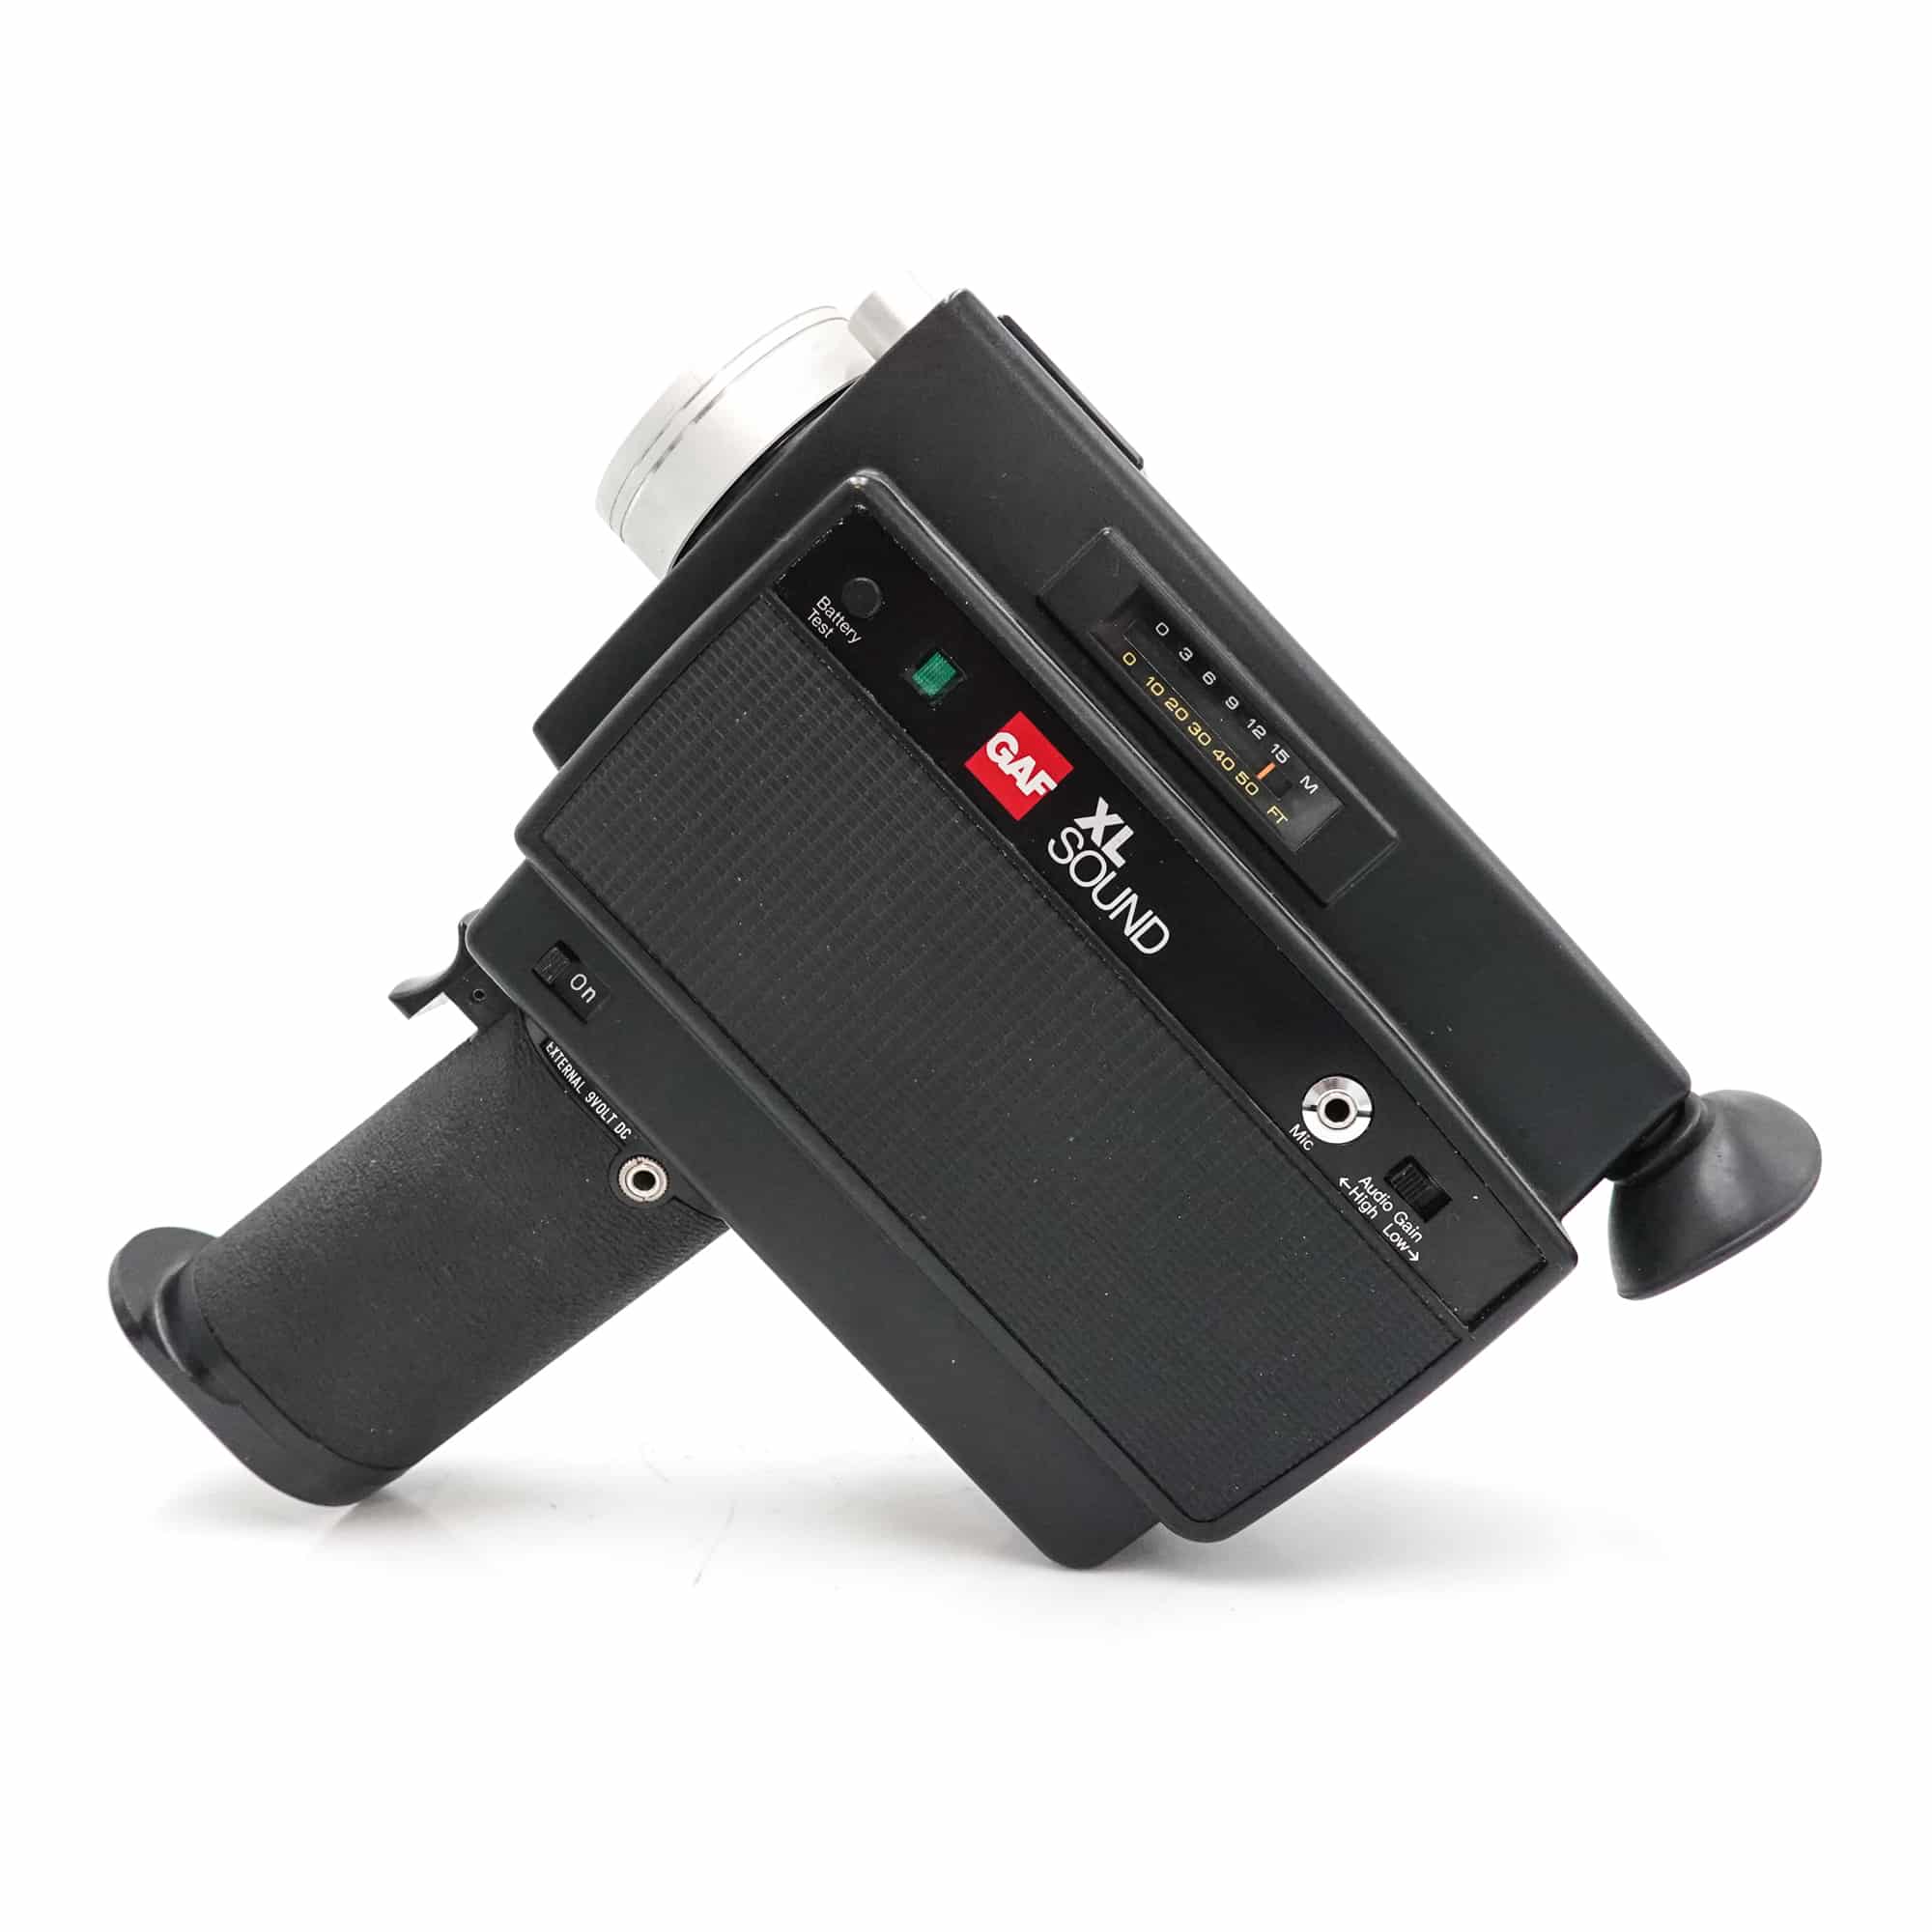 GAF XL Sound Super 8 Camera